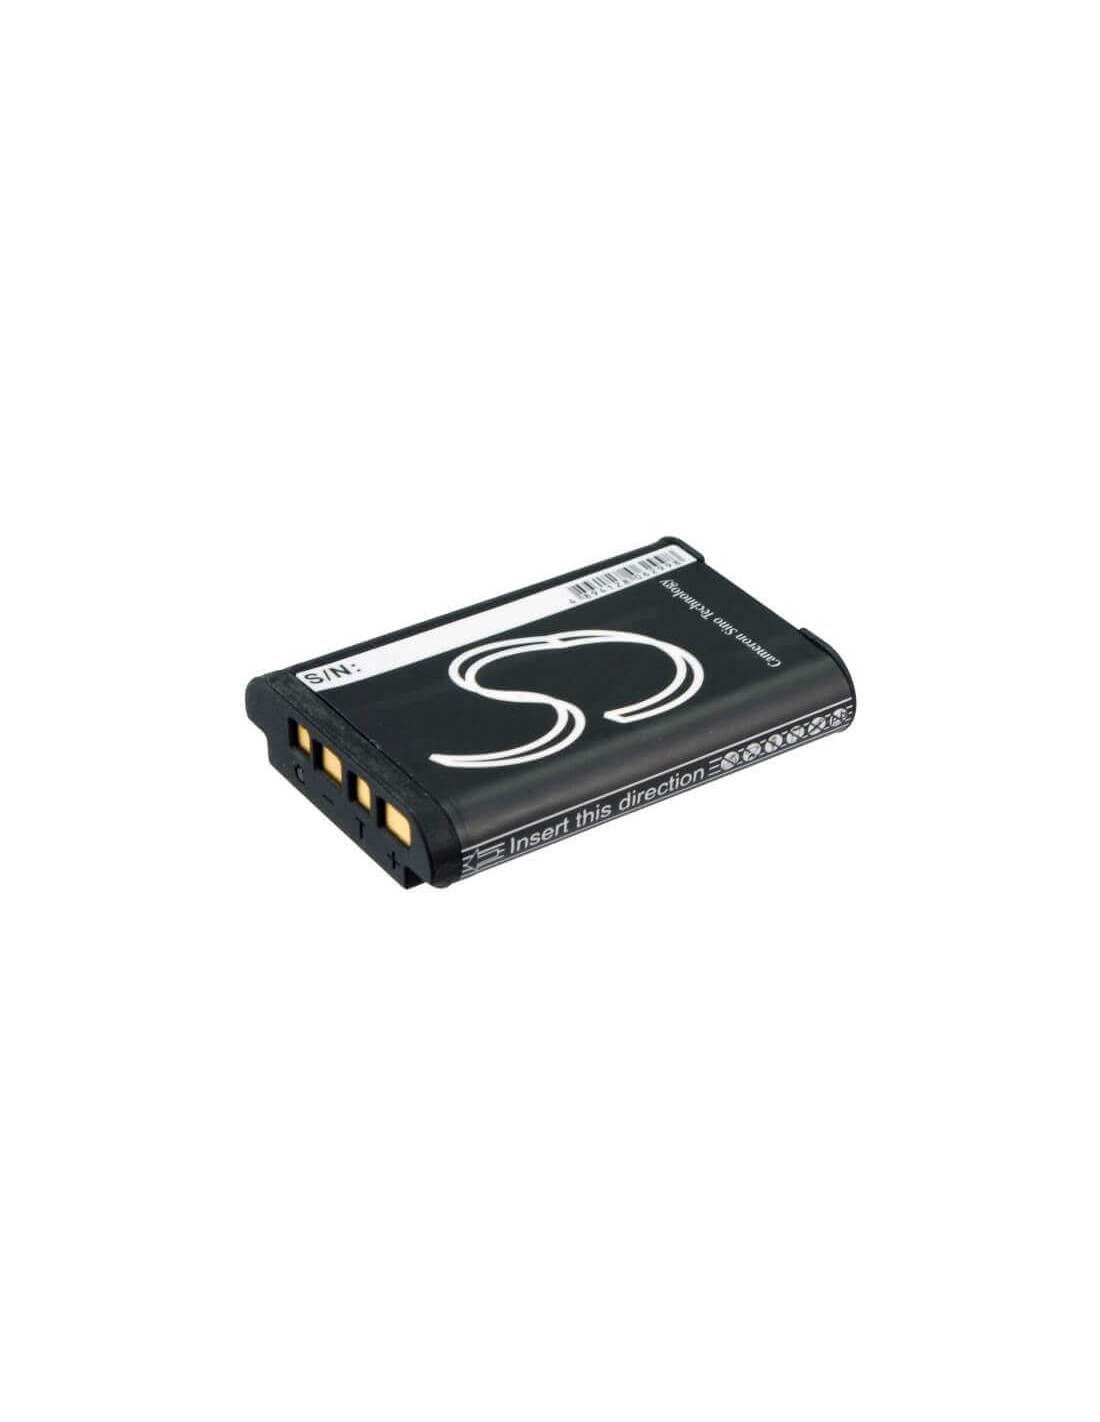 Battery for Sony Cyber-shot Dsc-hx300, Cyber-shot Dsc-hx50, 3.7V, 950mAh - 3.52Wh